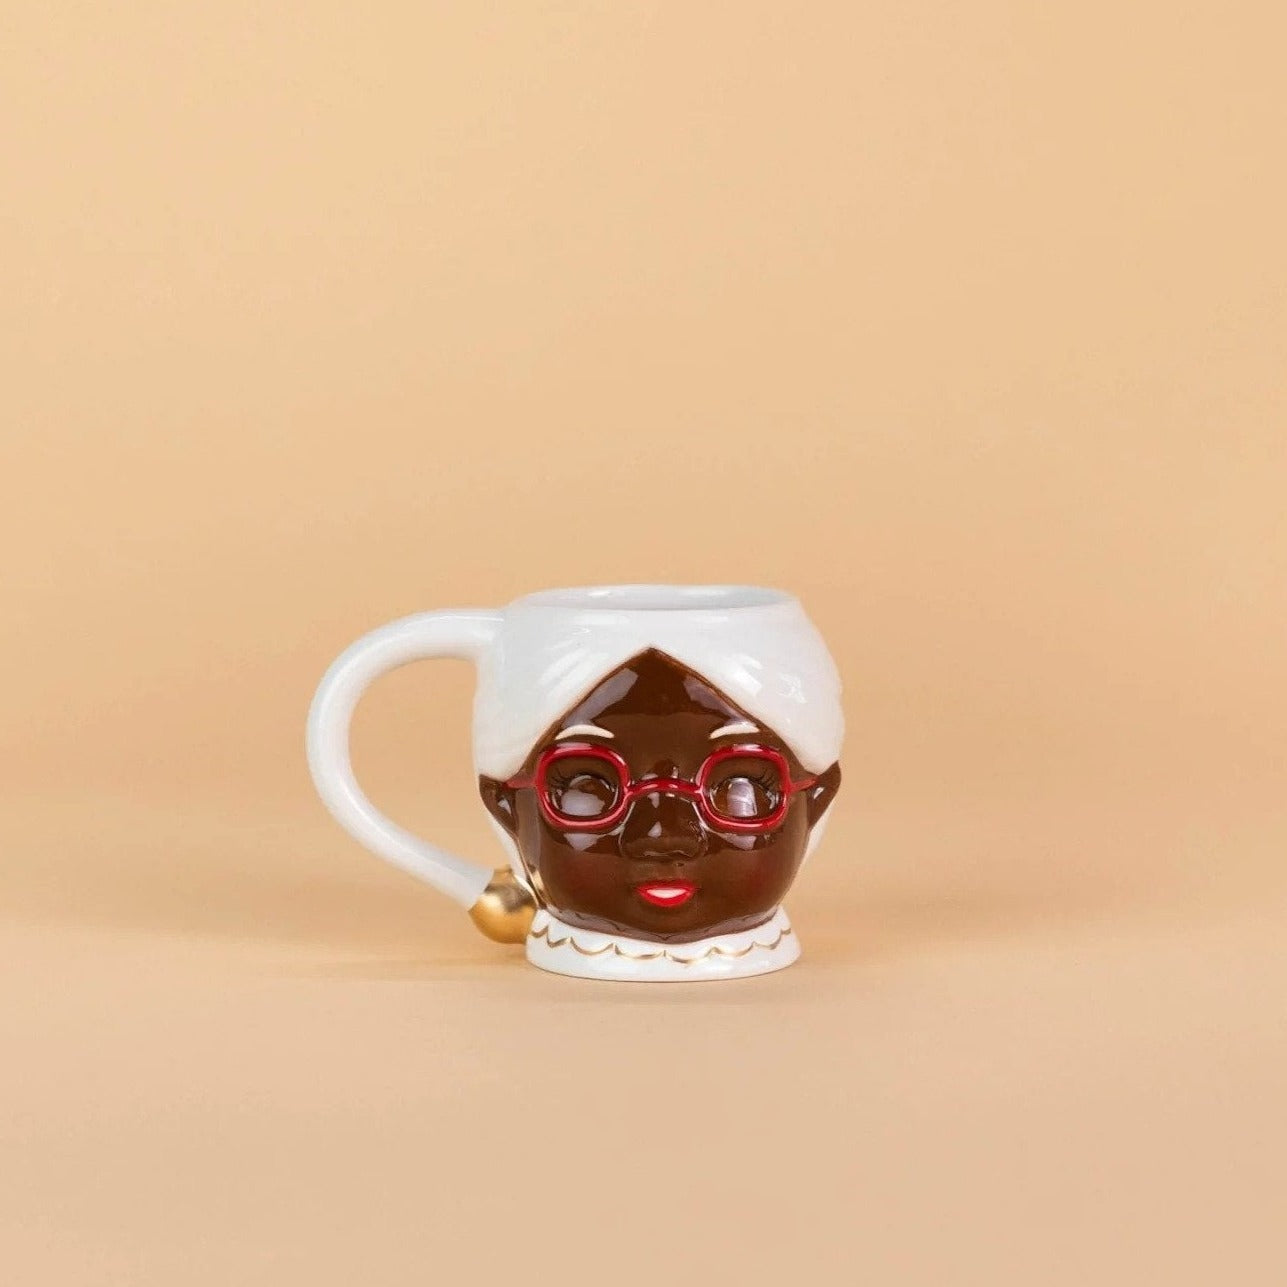 Mrs. Cocoa Claus Mug in Chocolate